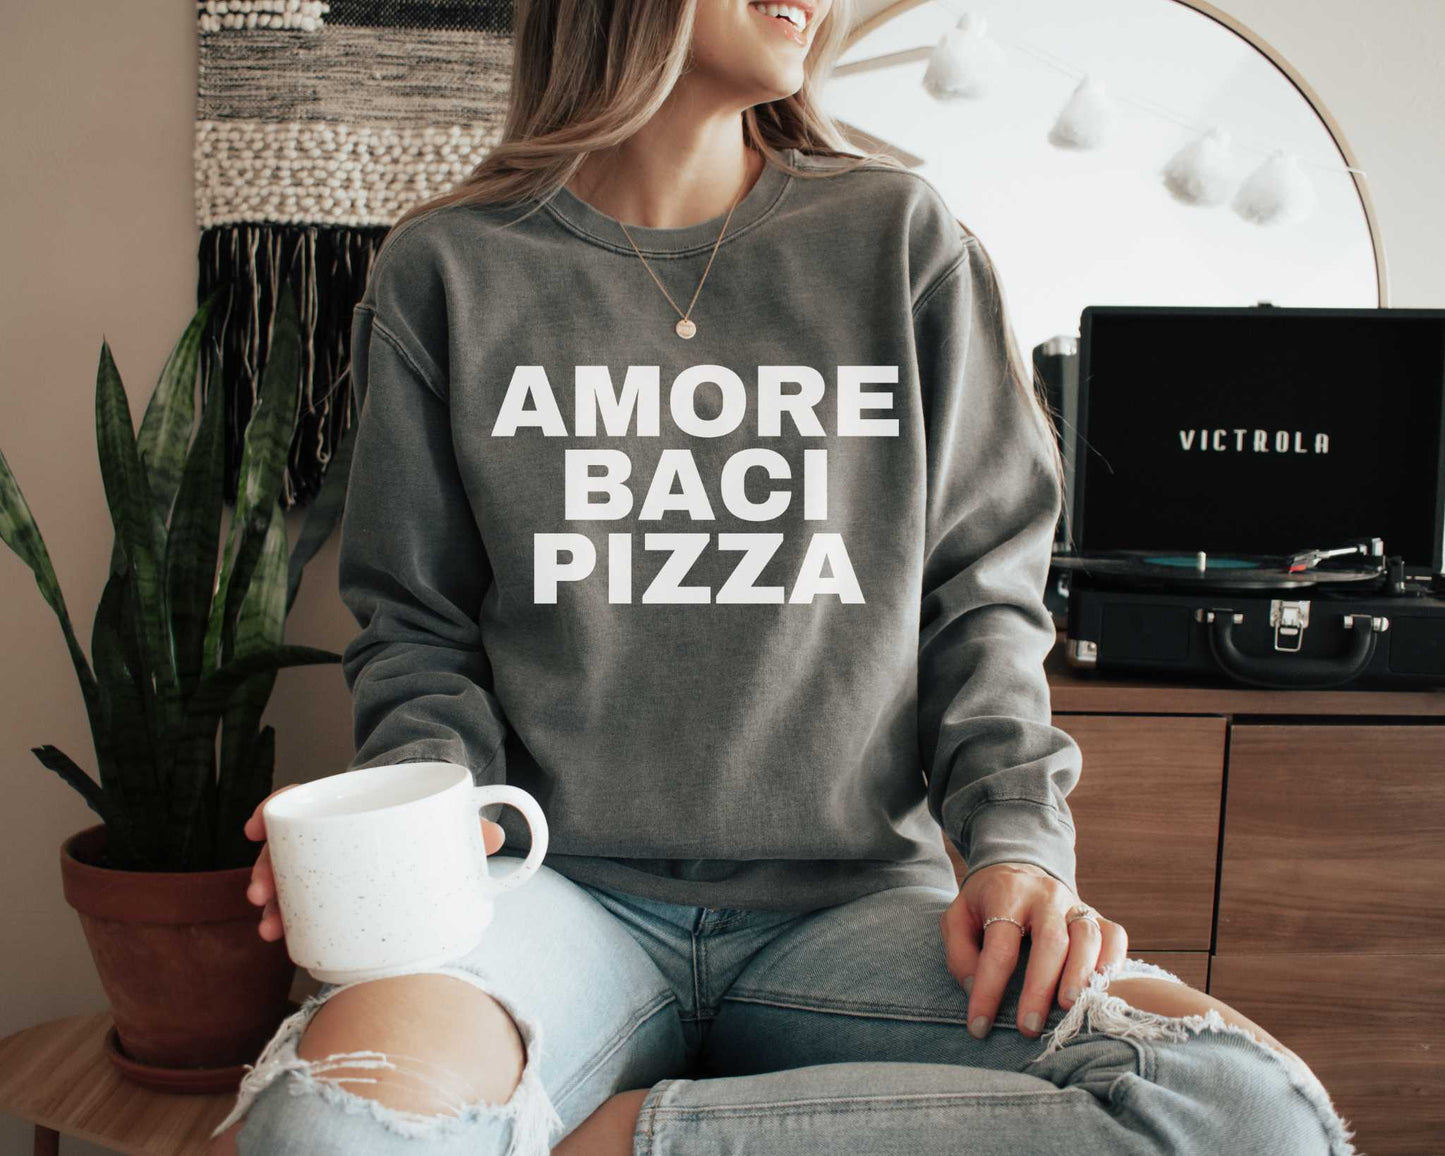 Amore Baci Pizza (Love Kisses Pizza) Sweatshirt in Pepper